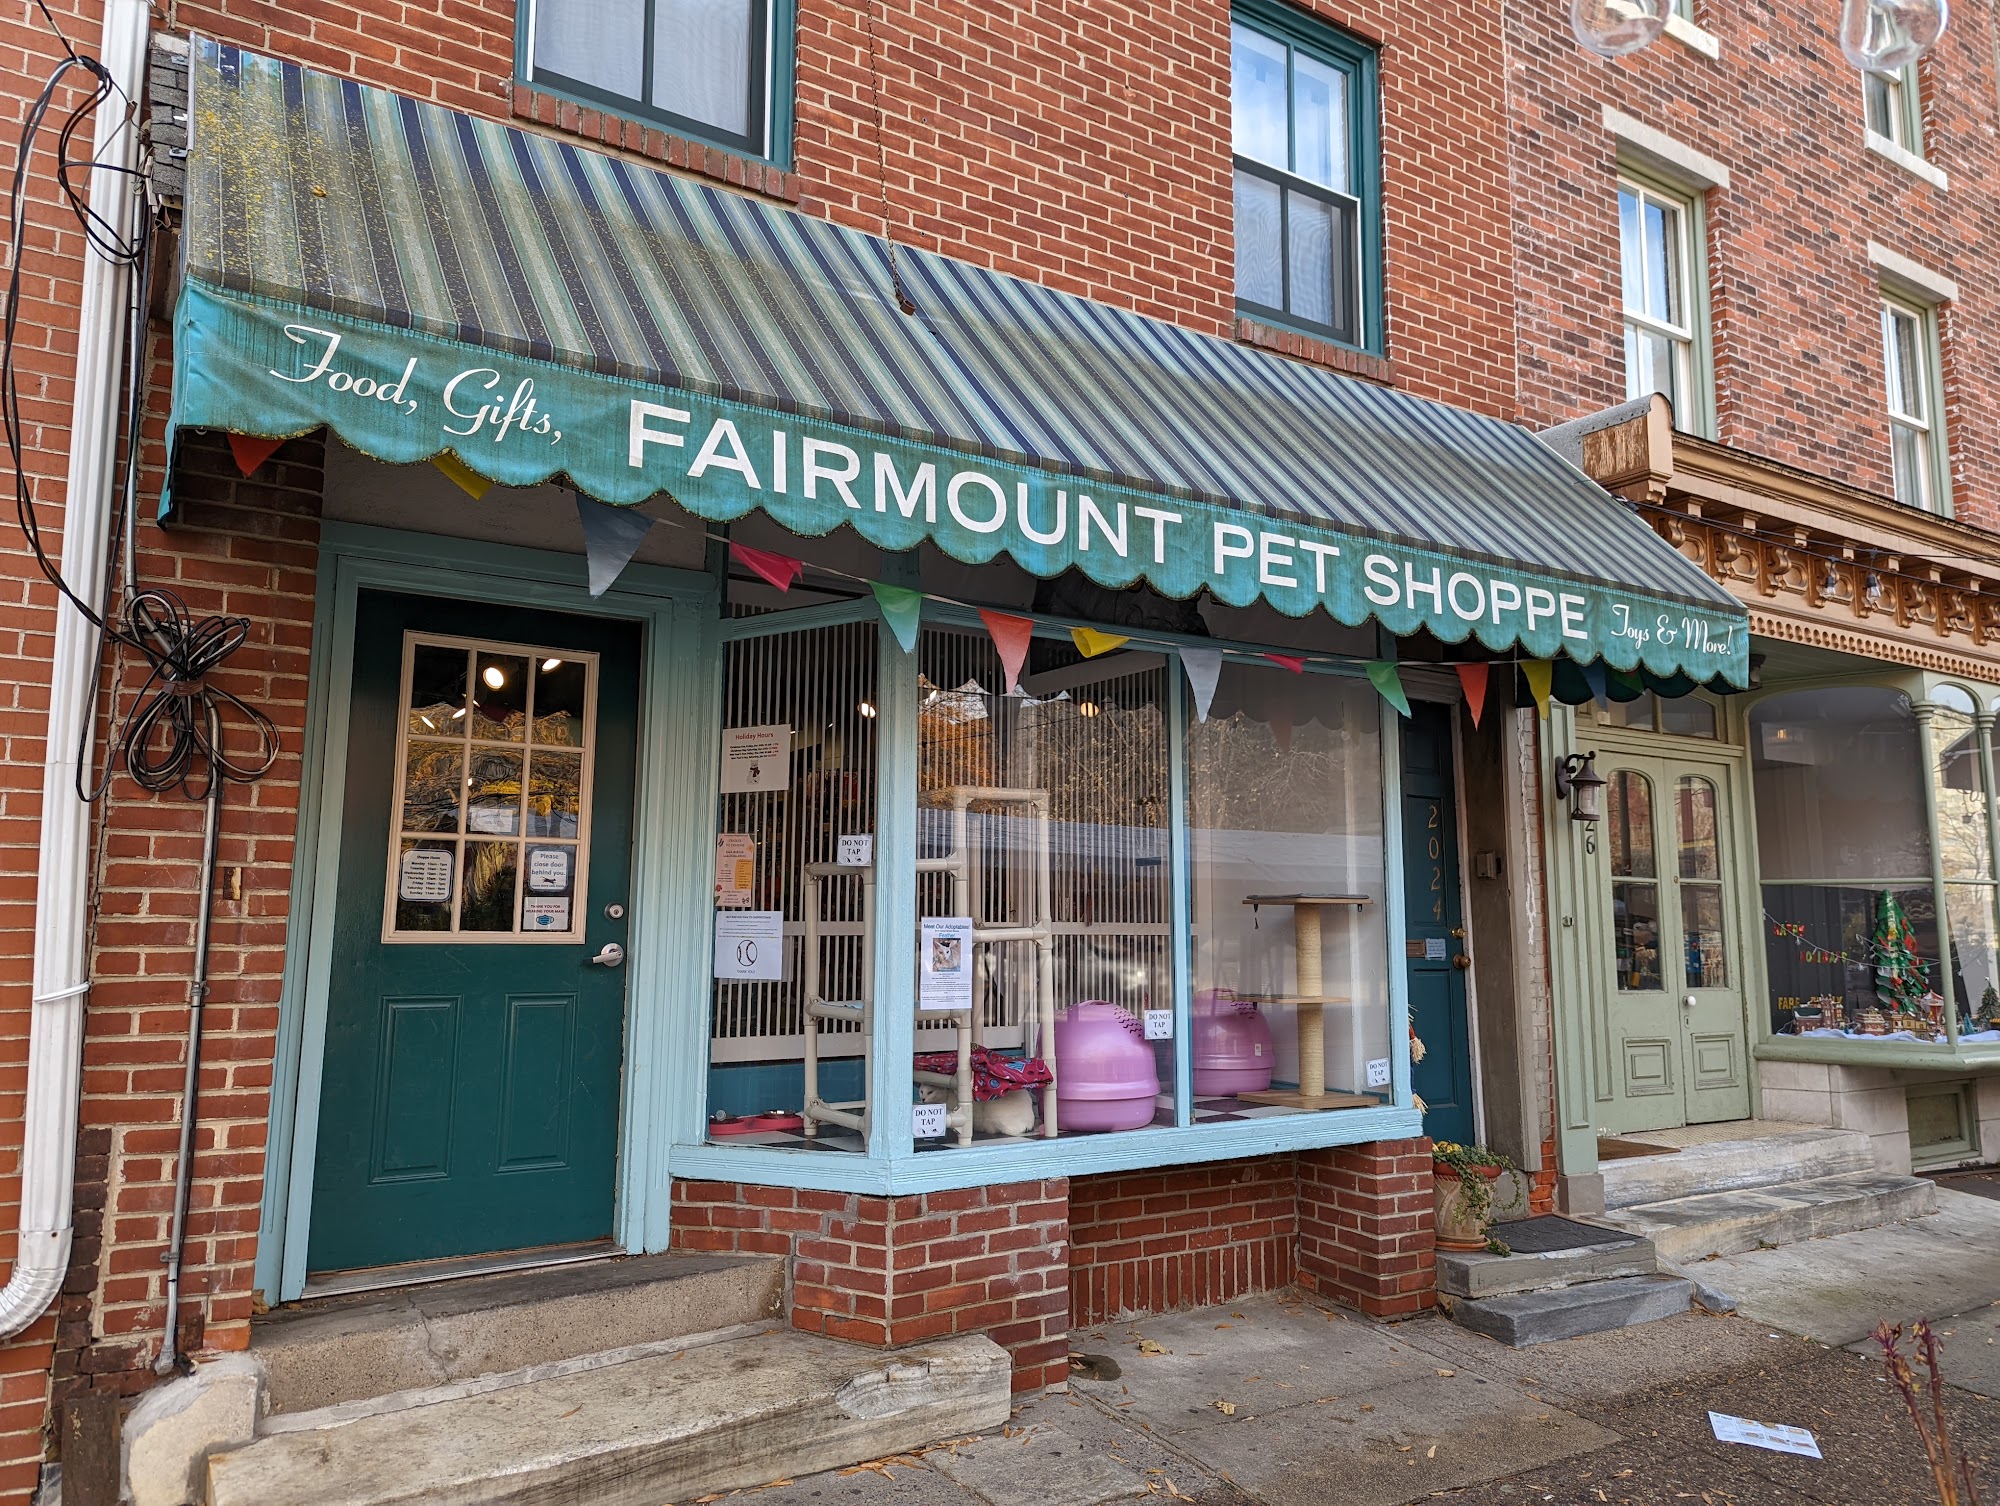 Fairmount Pet Shoppe